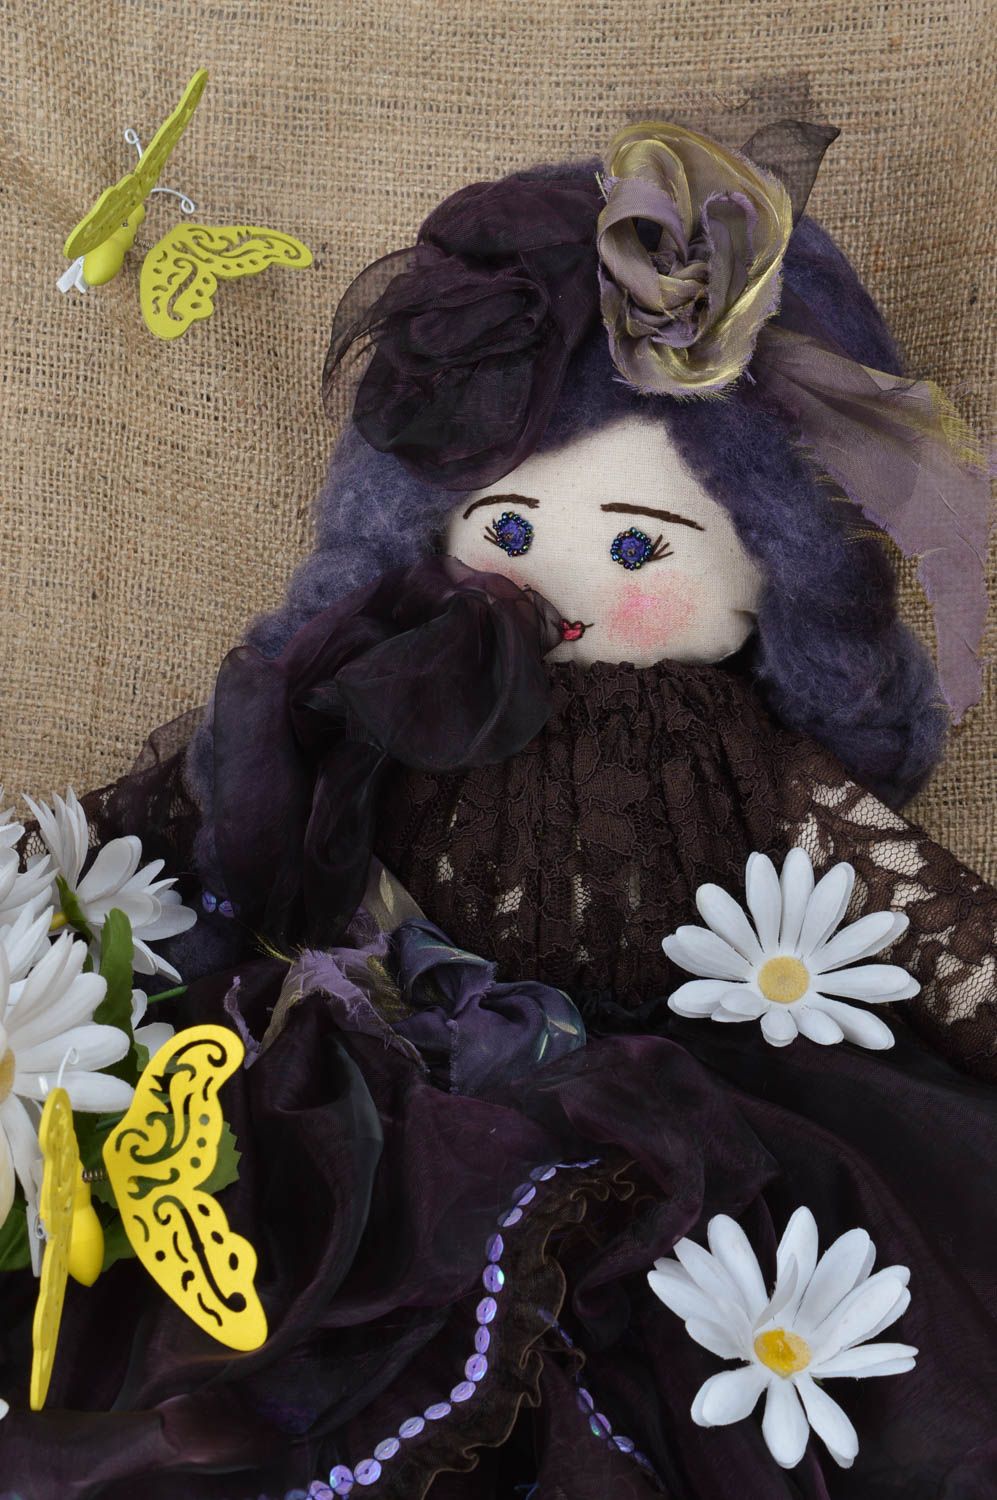 Handmade doll designer doll soft doll baby toy doll for kids gift ideas photo 1